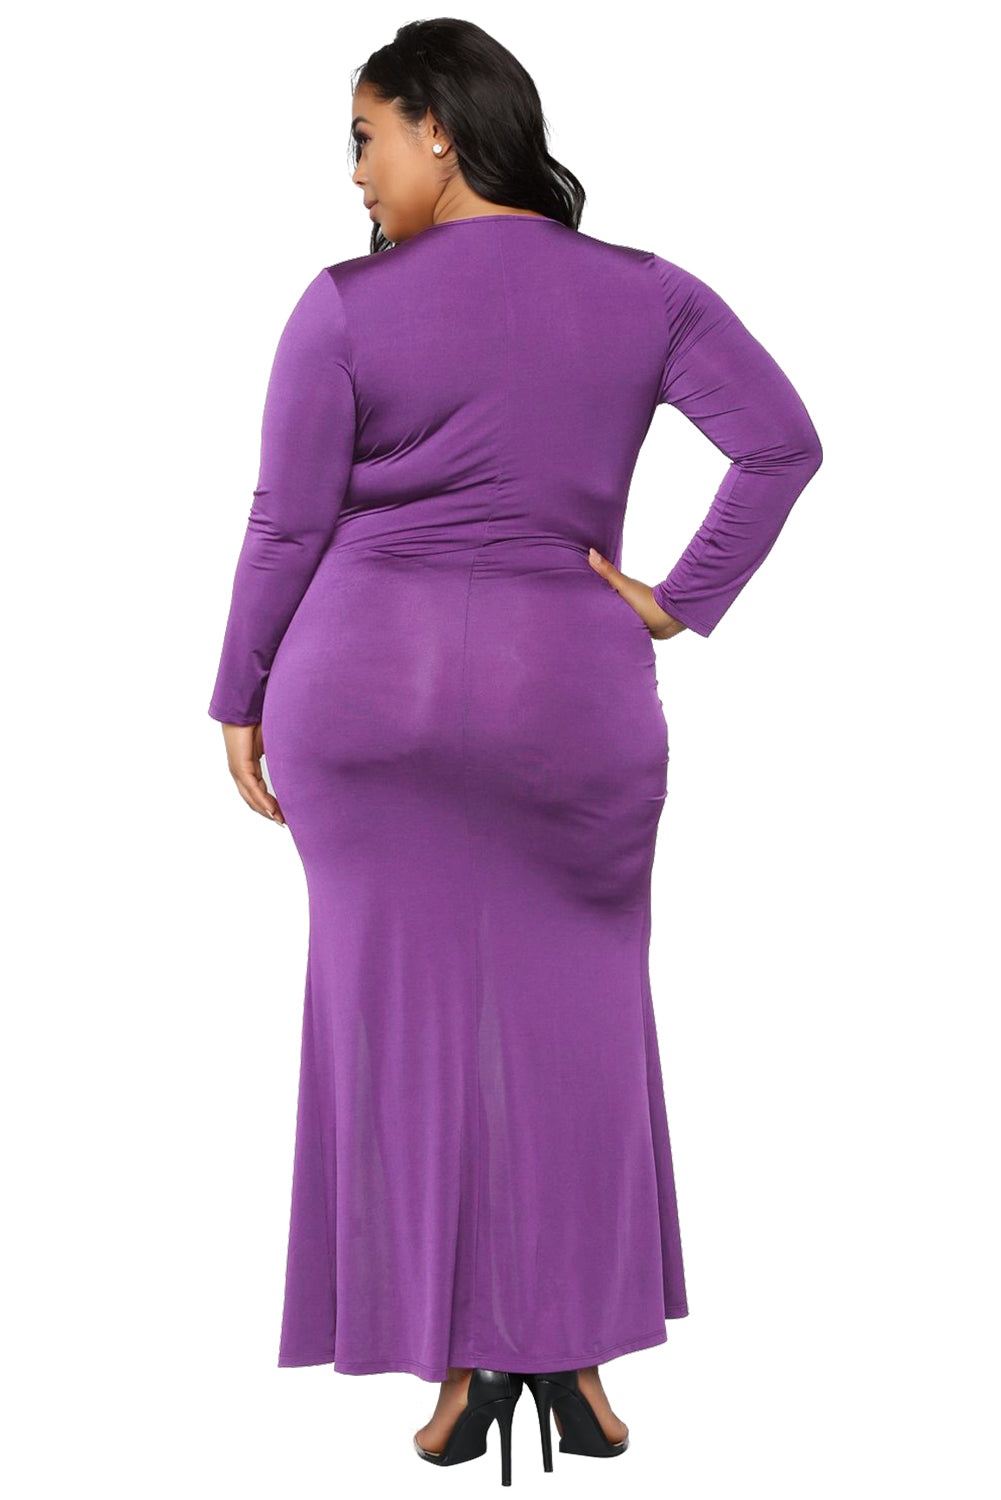 Surplice Long Sleeve Plus Size Dress ( Black, Purple)